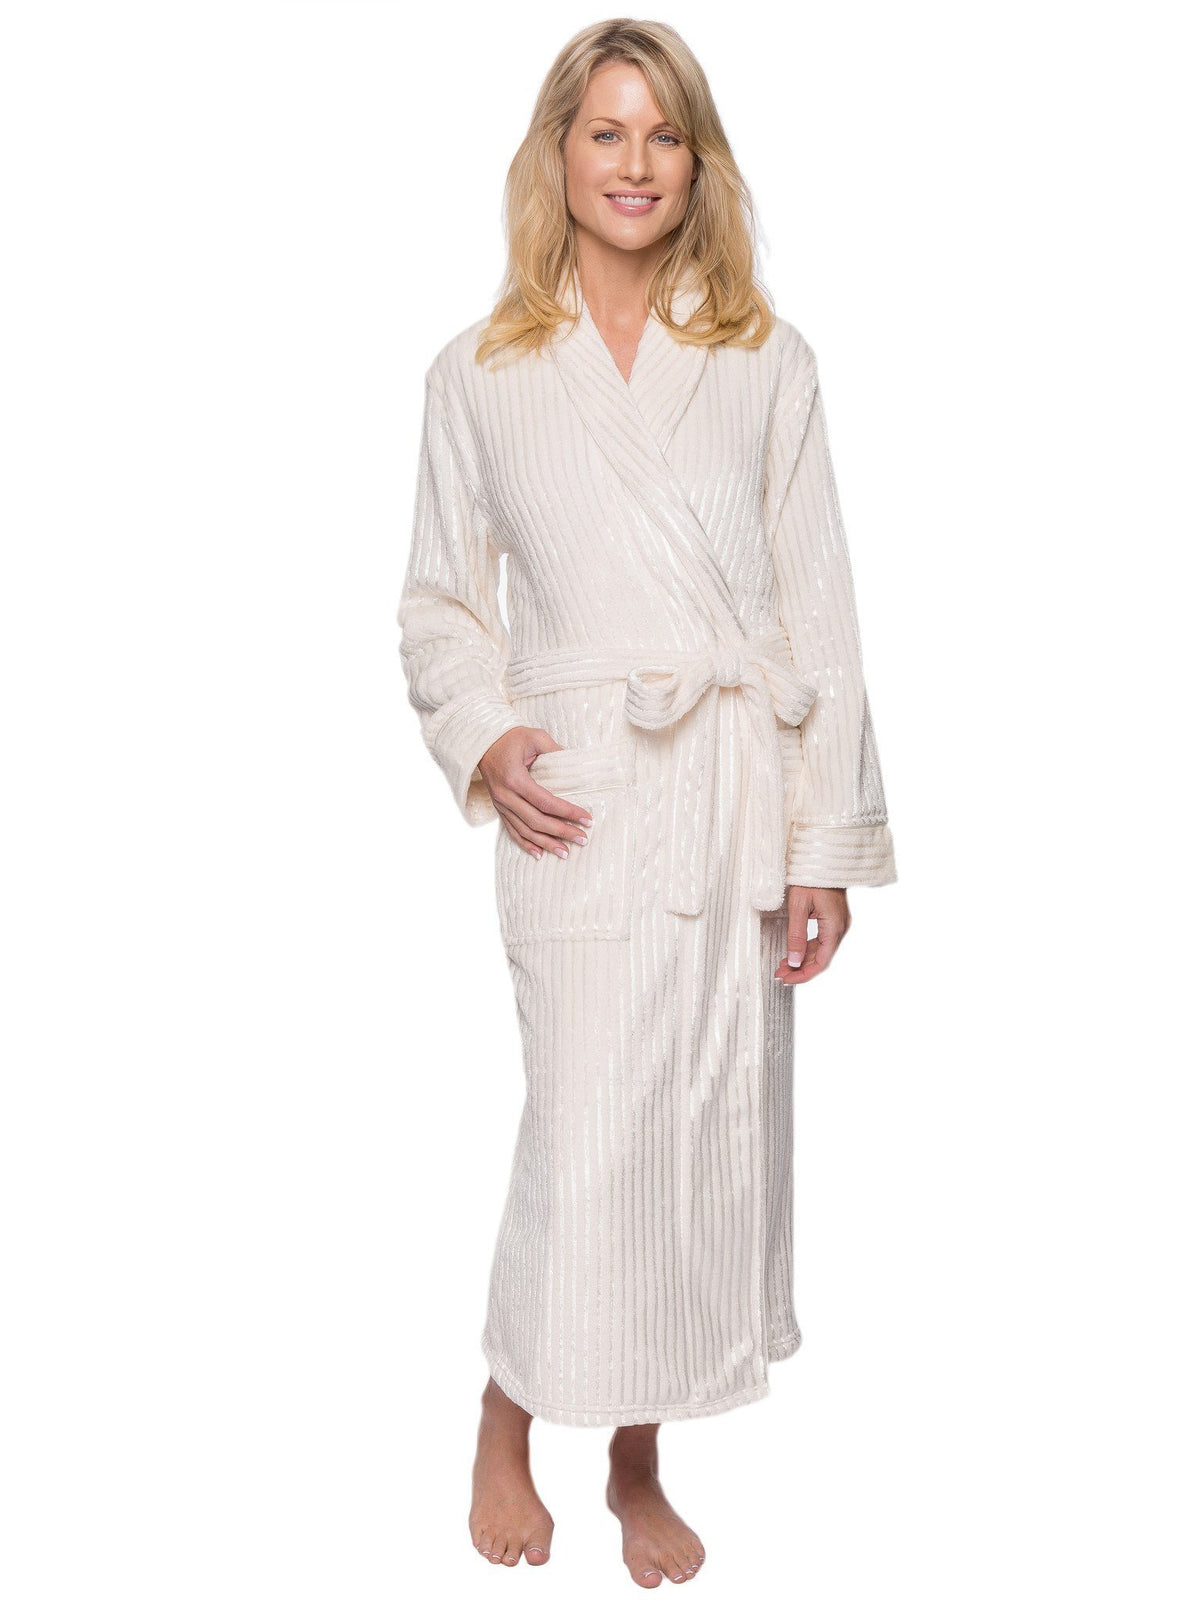 Women's Premium Coral Fleece Plush Spa/Bath Robe - Stripes Cream